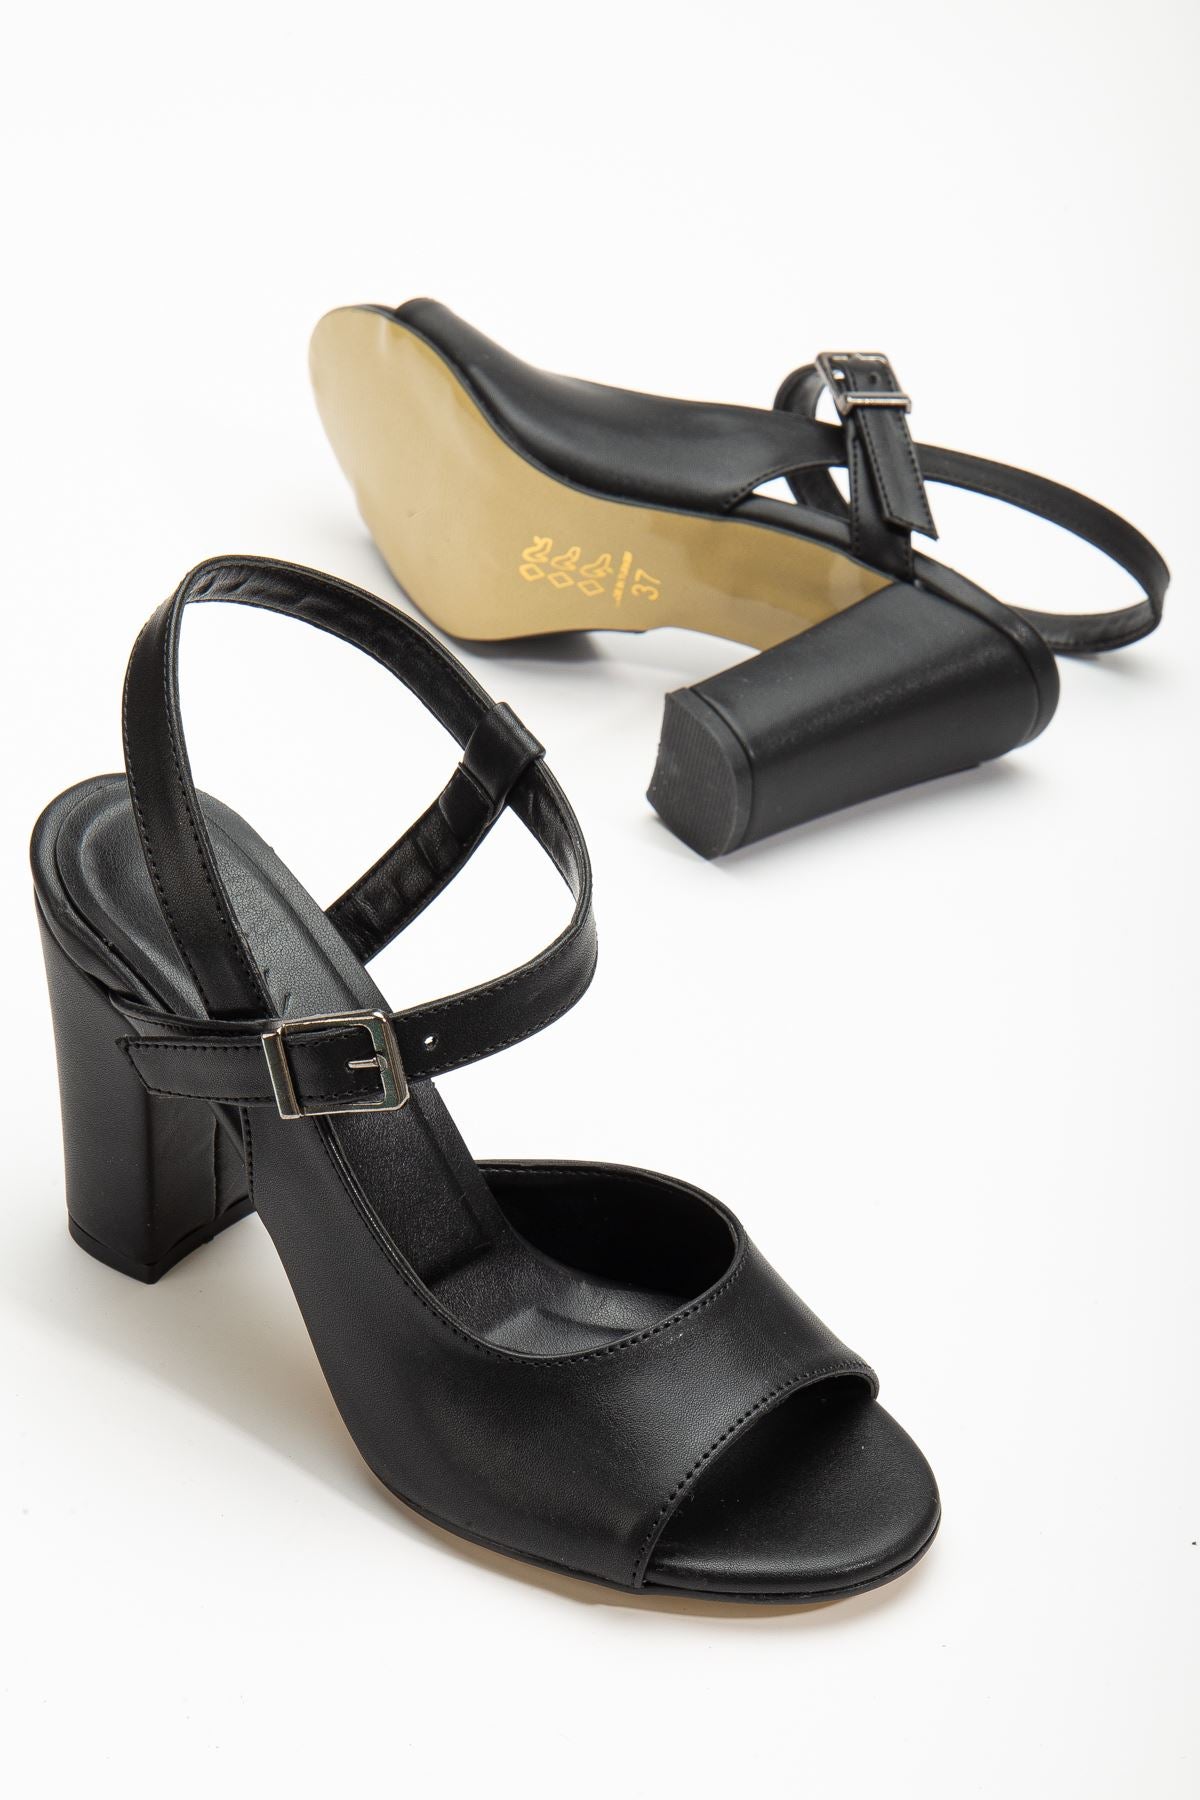 Lovisa Heeled Black Skin Women's Shoes - STREETMODE™